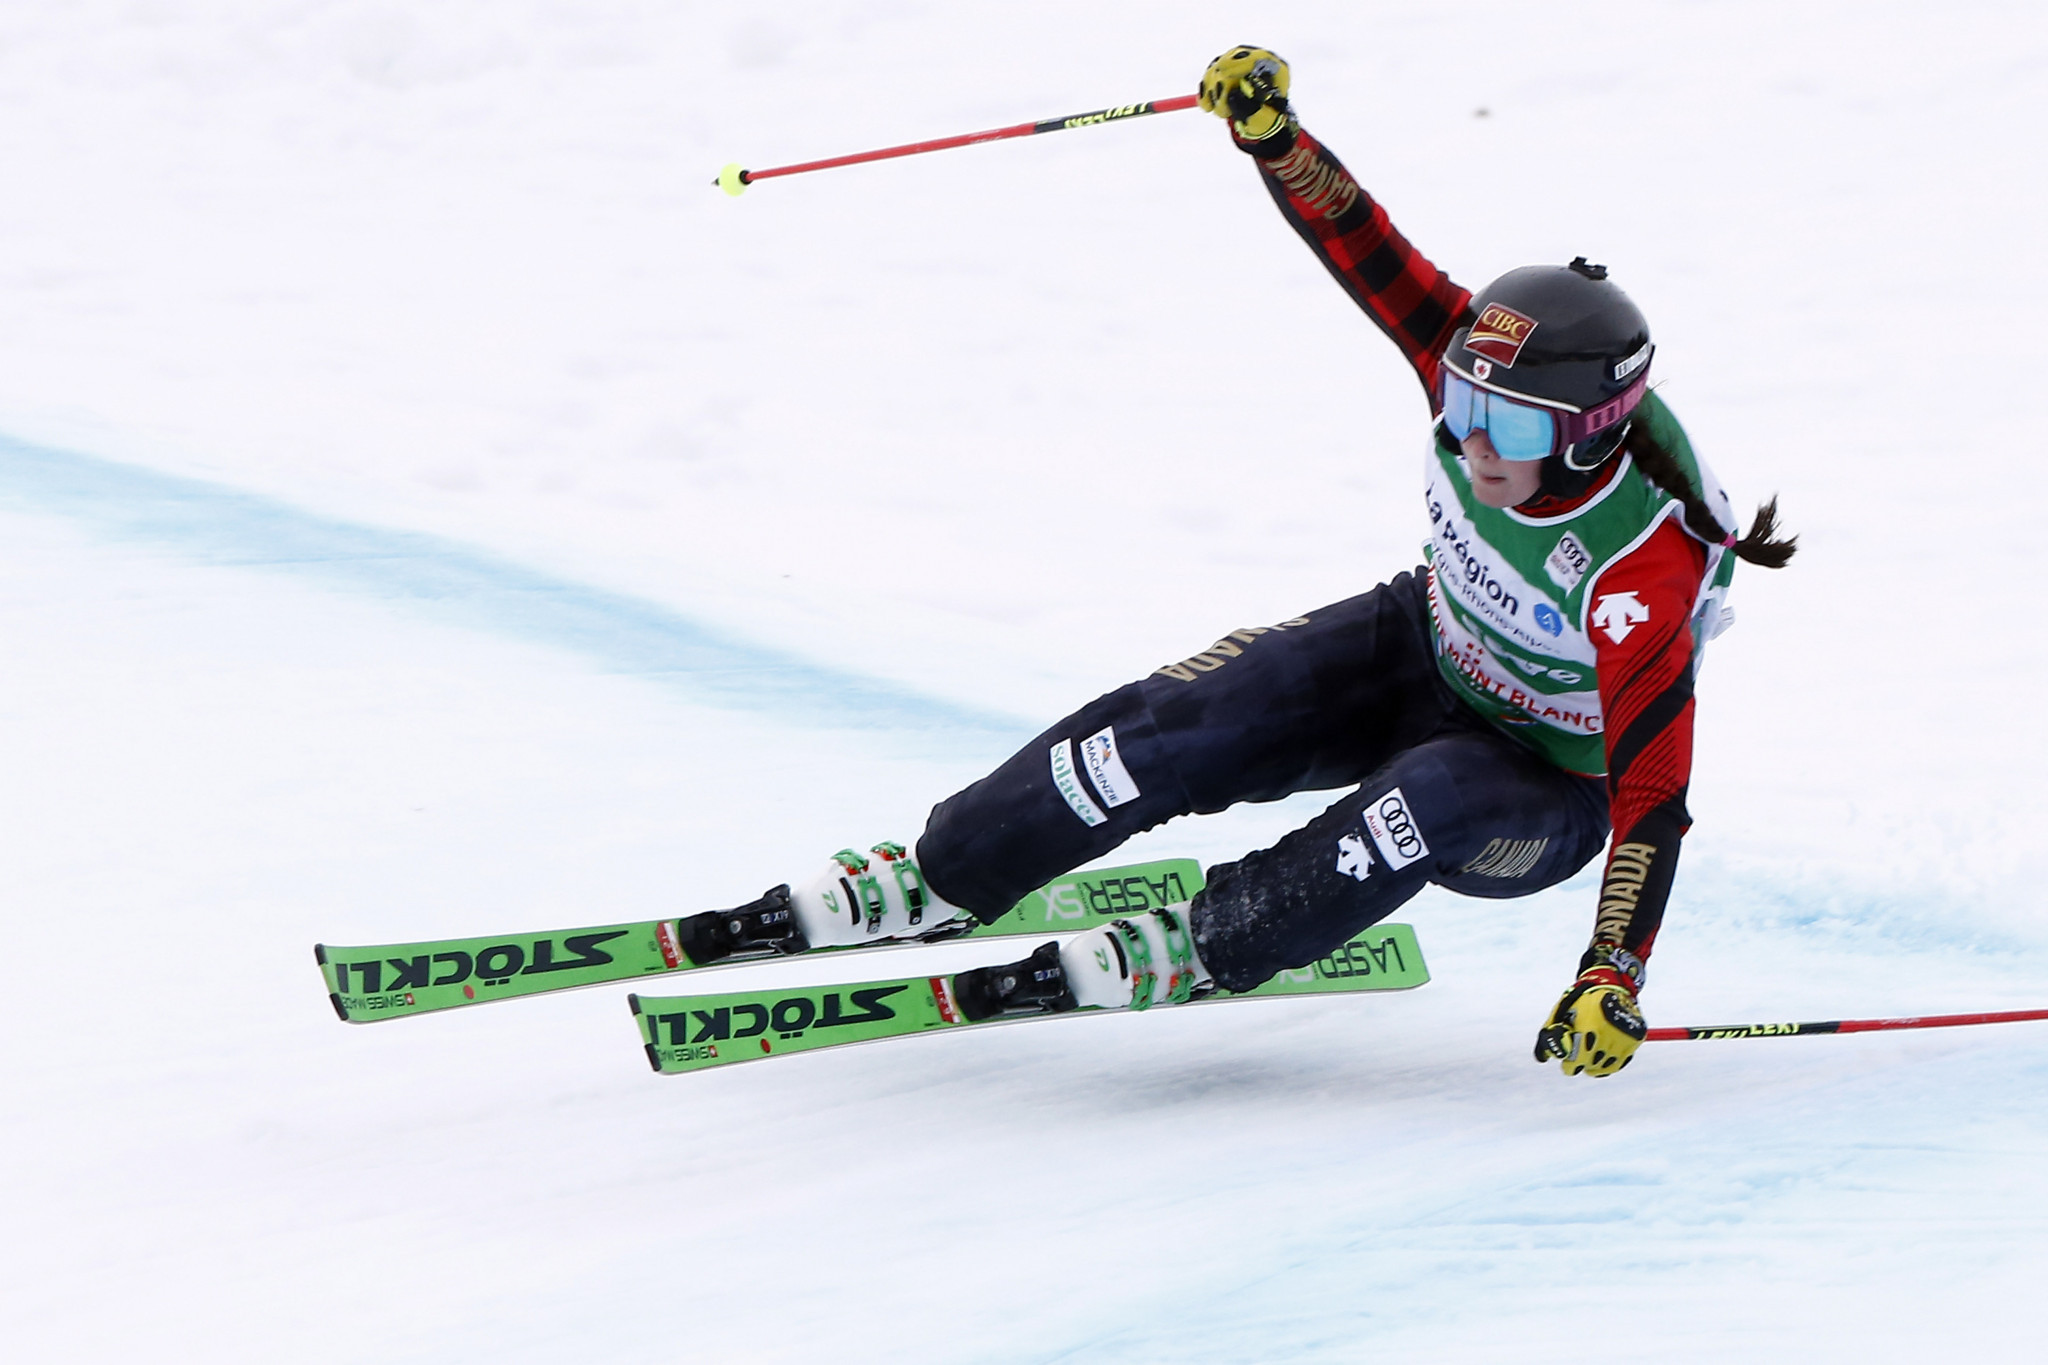 Thompson triumphs at Ski Cross World Cup in Arosa